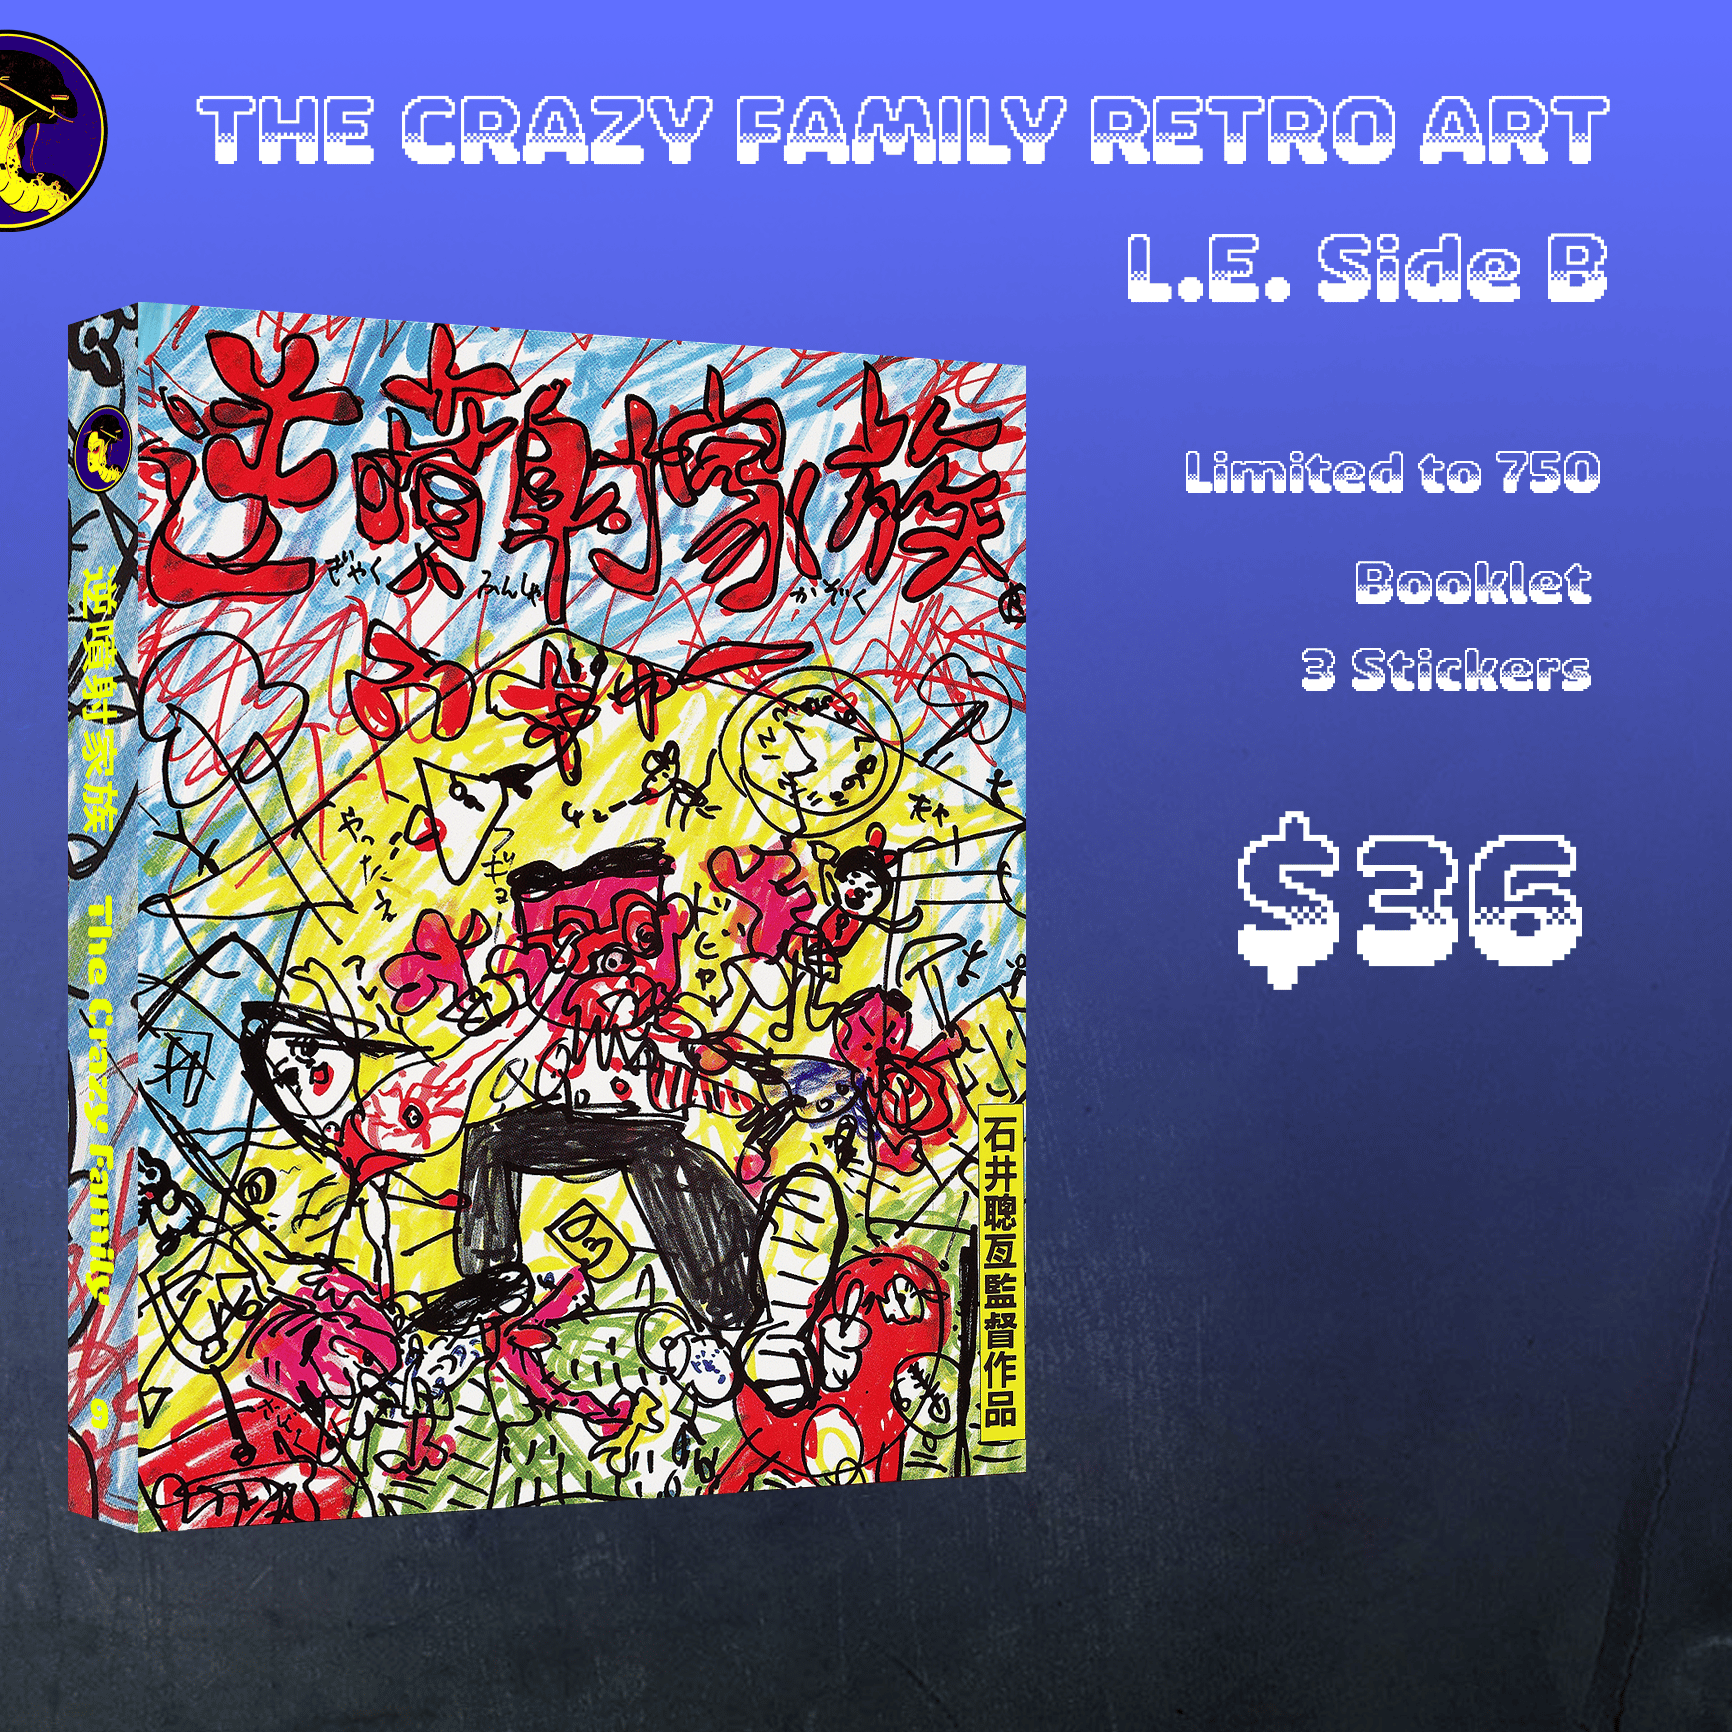 The Crazy Family Retro Art Limited Edition | Error 4444